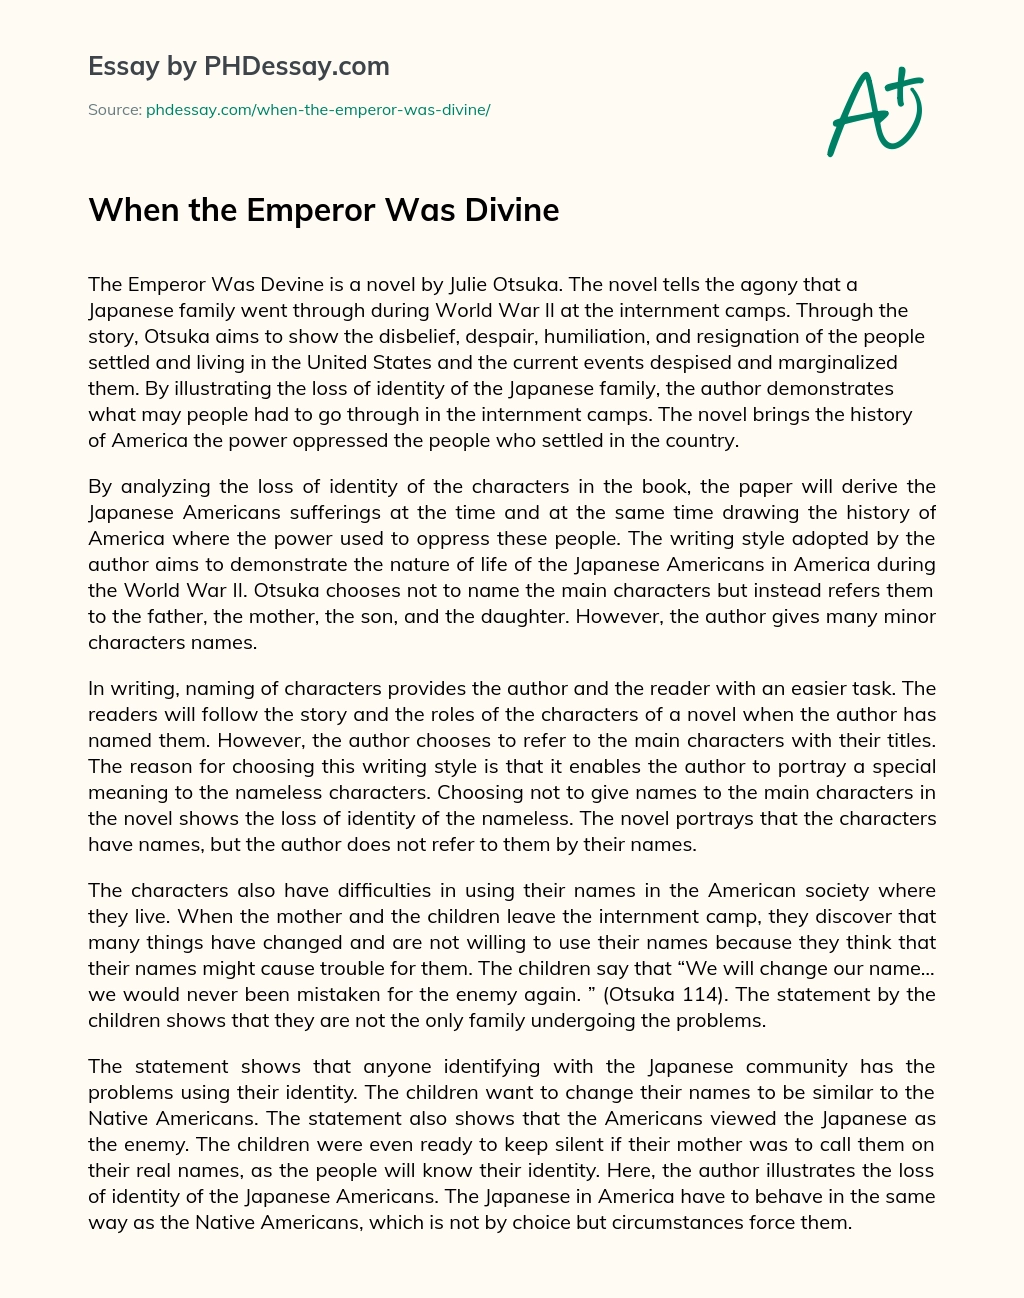 When the Emperor Was Divine essay